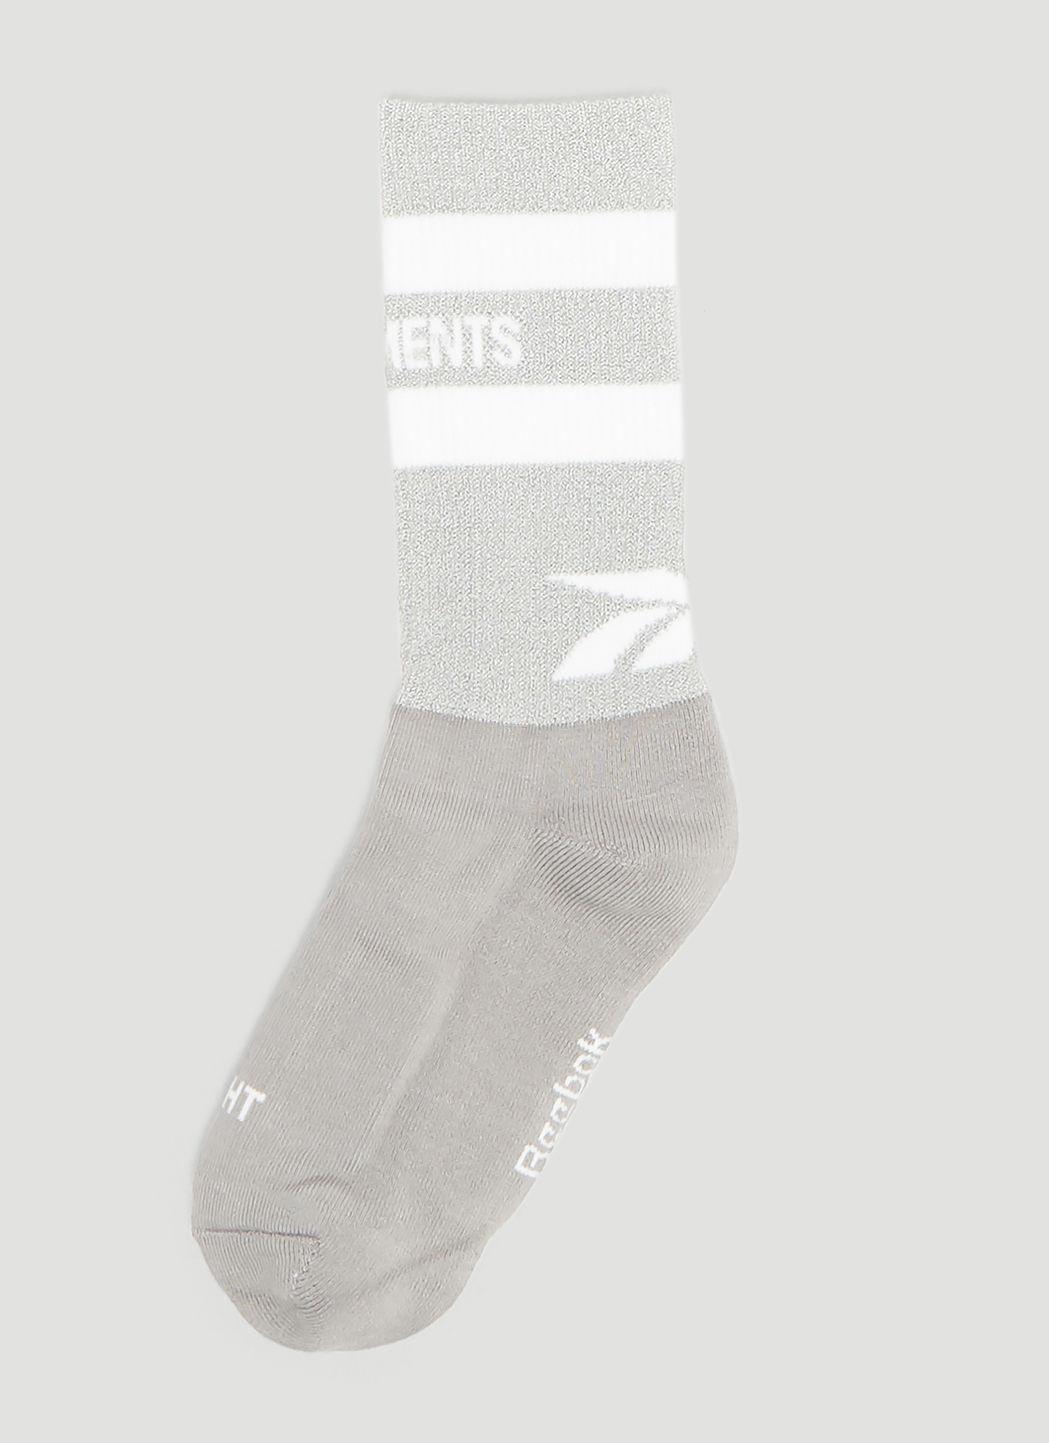 vetements x reebok reflective socks